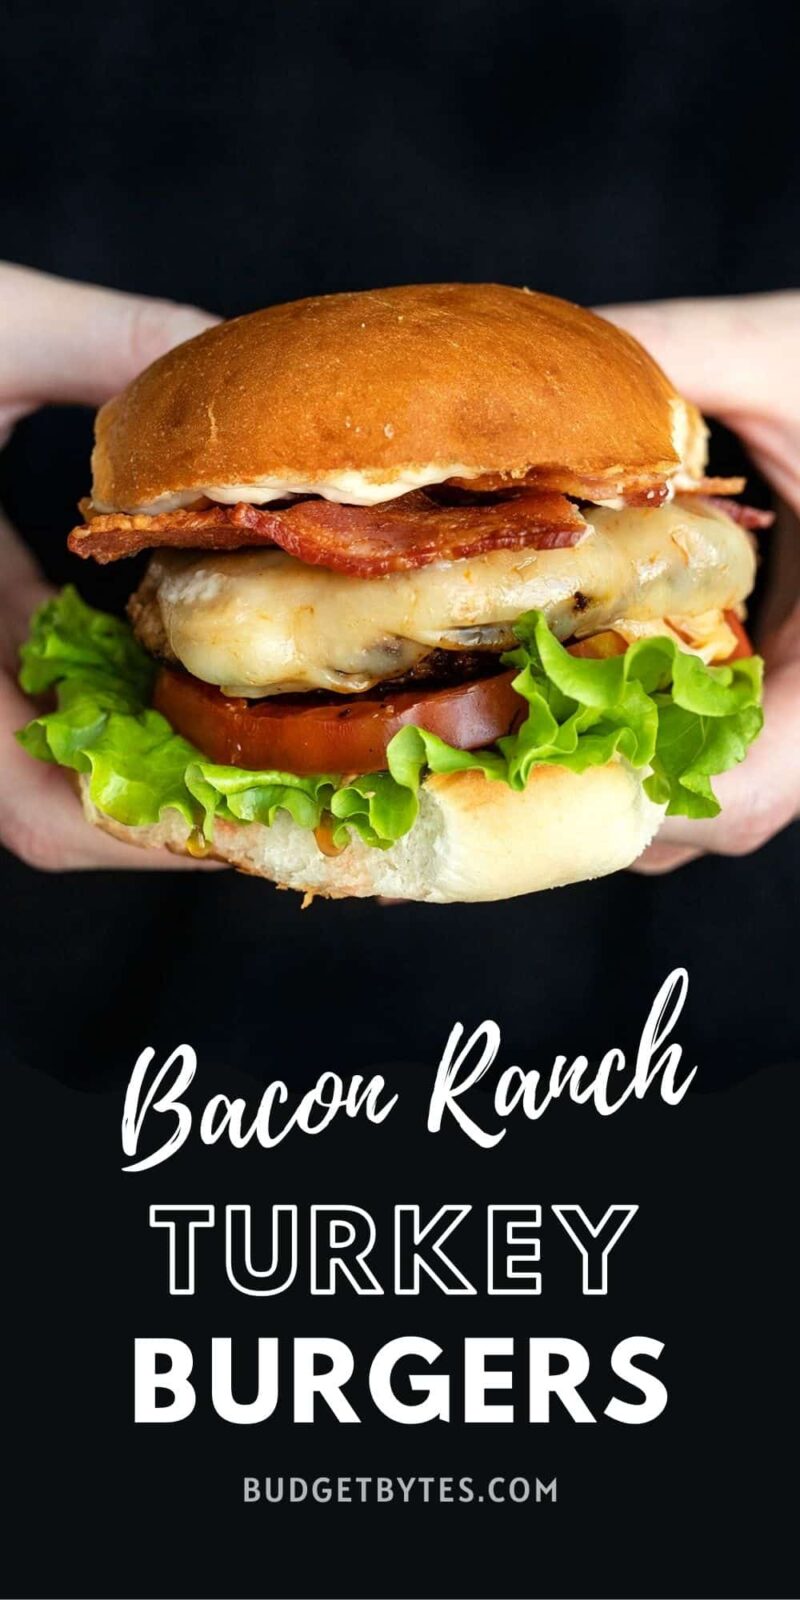 https://www.budgetbytes.com/wp-content/uploads/2021/09/Bacon-Ranch-Turkey-Burgers-PIN3-800x1600.jpg